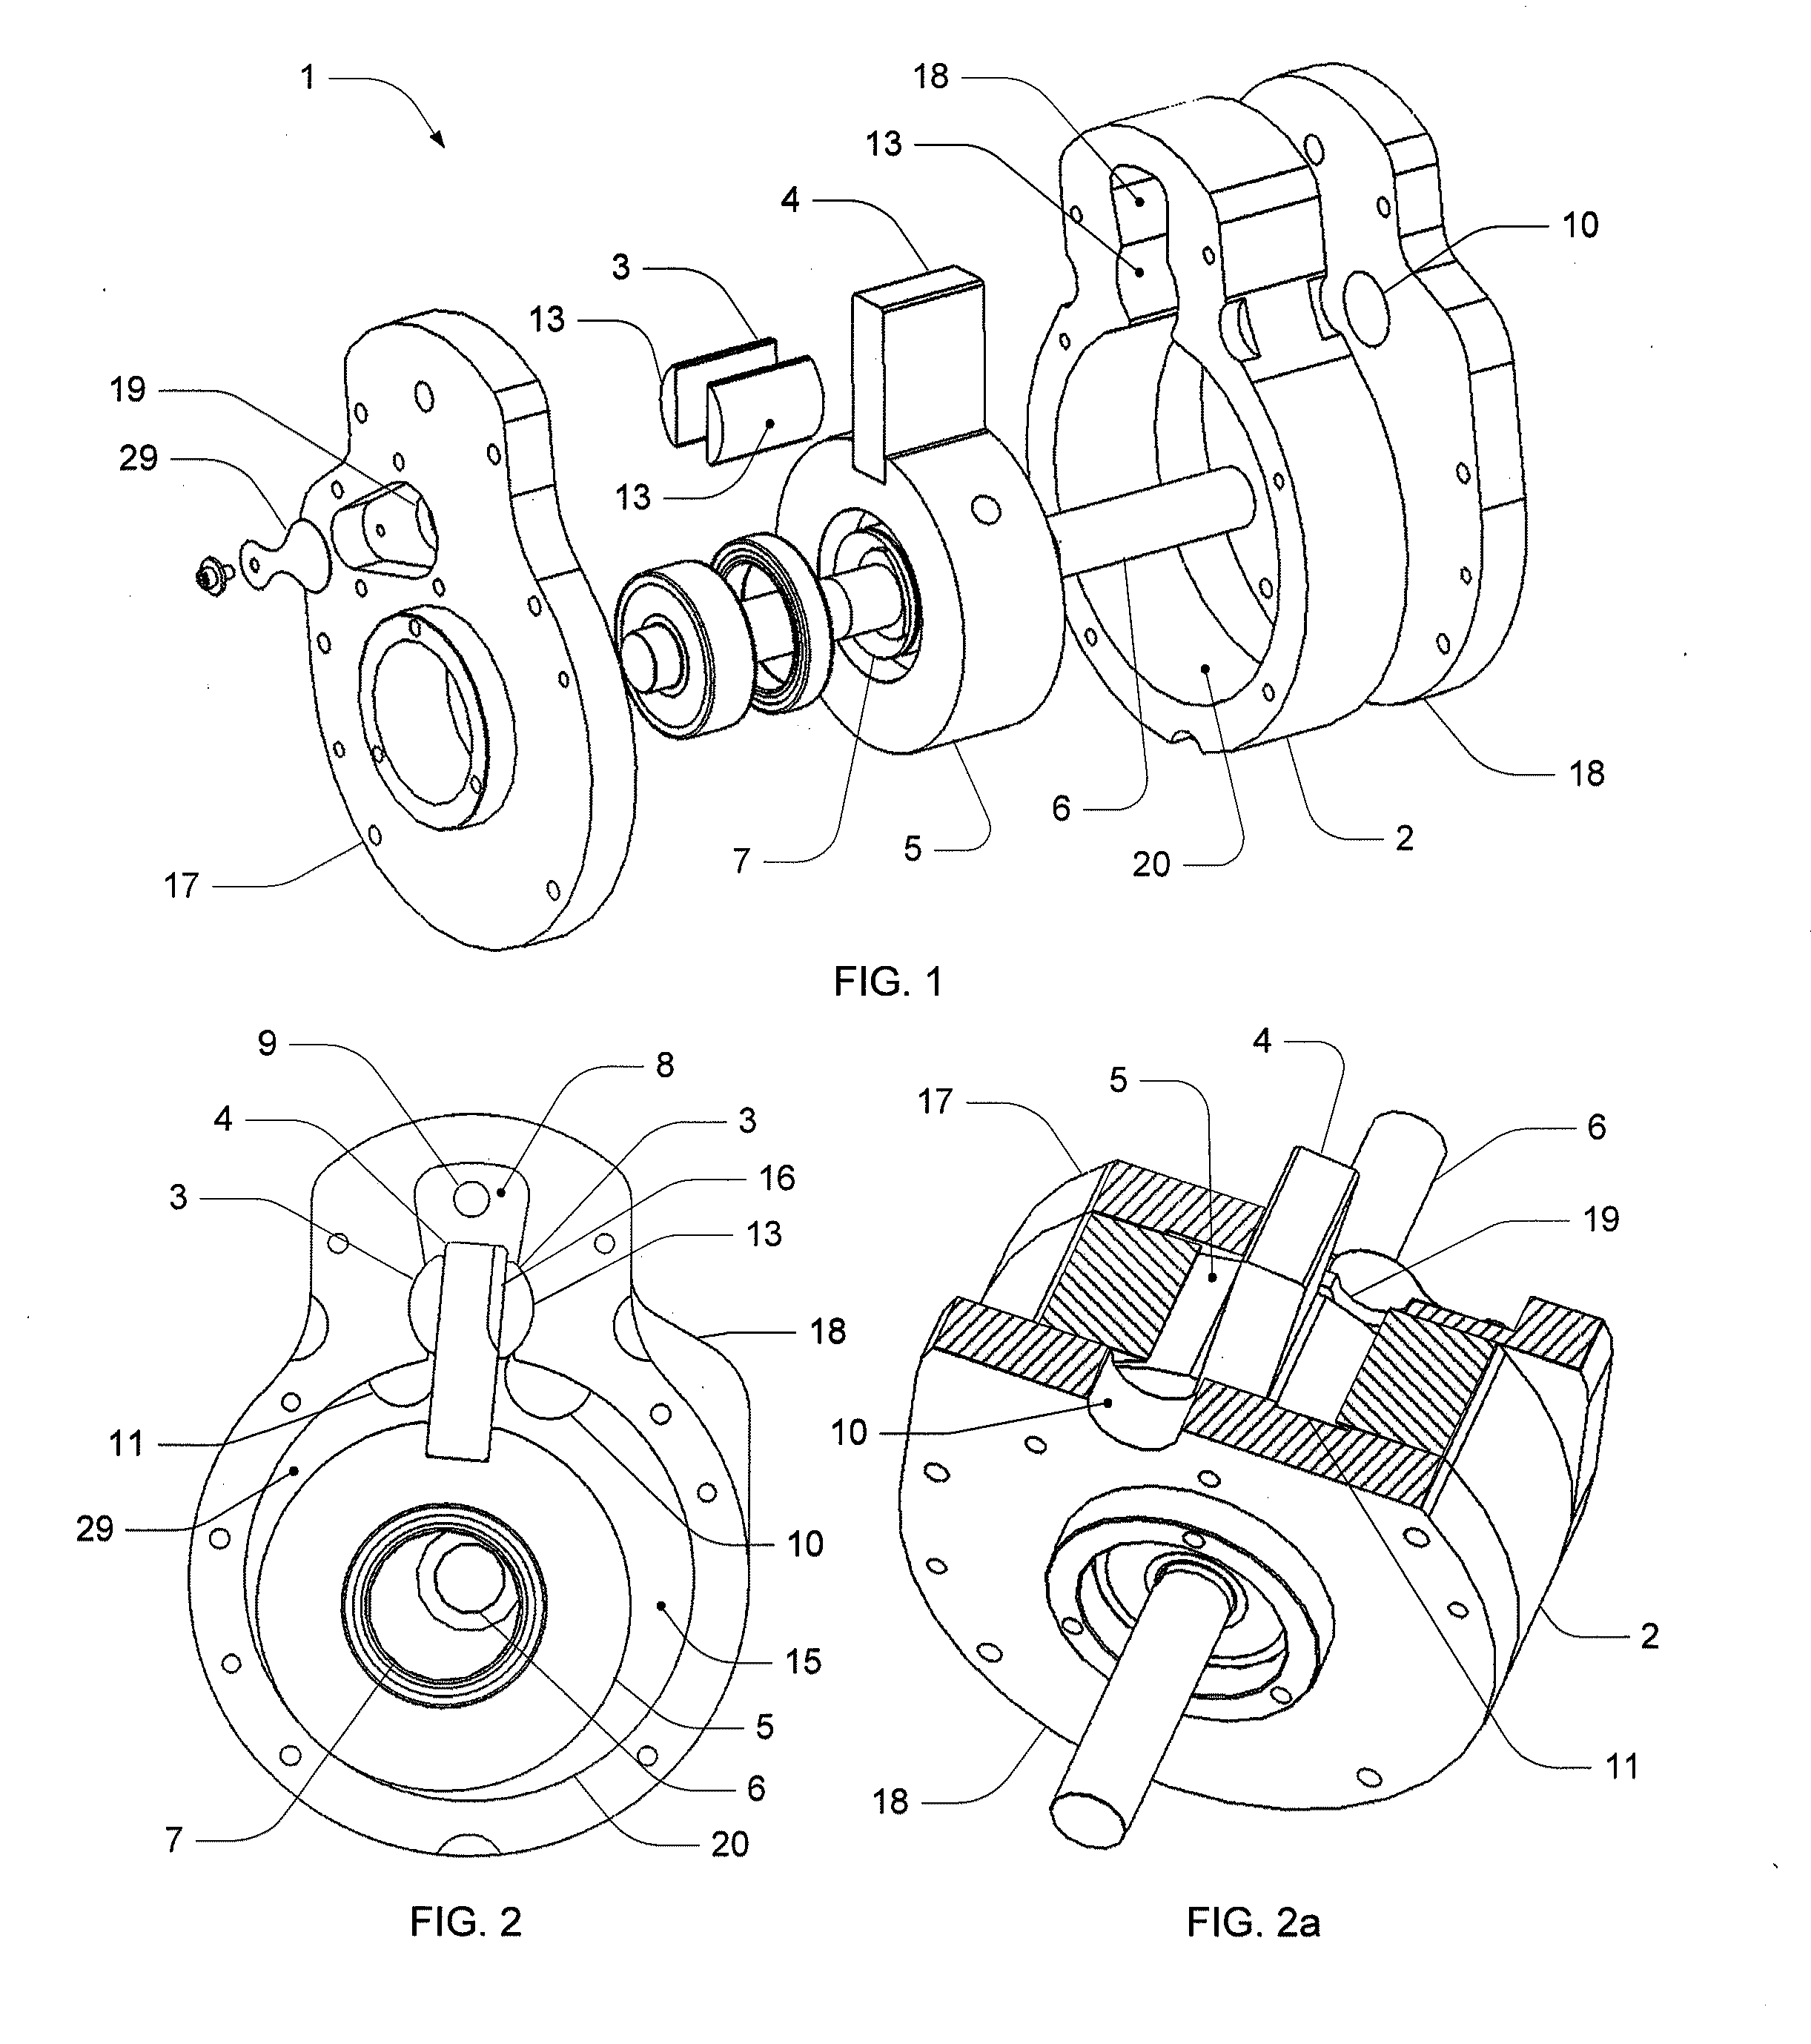 Rotary compressor and method